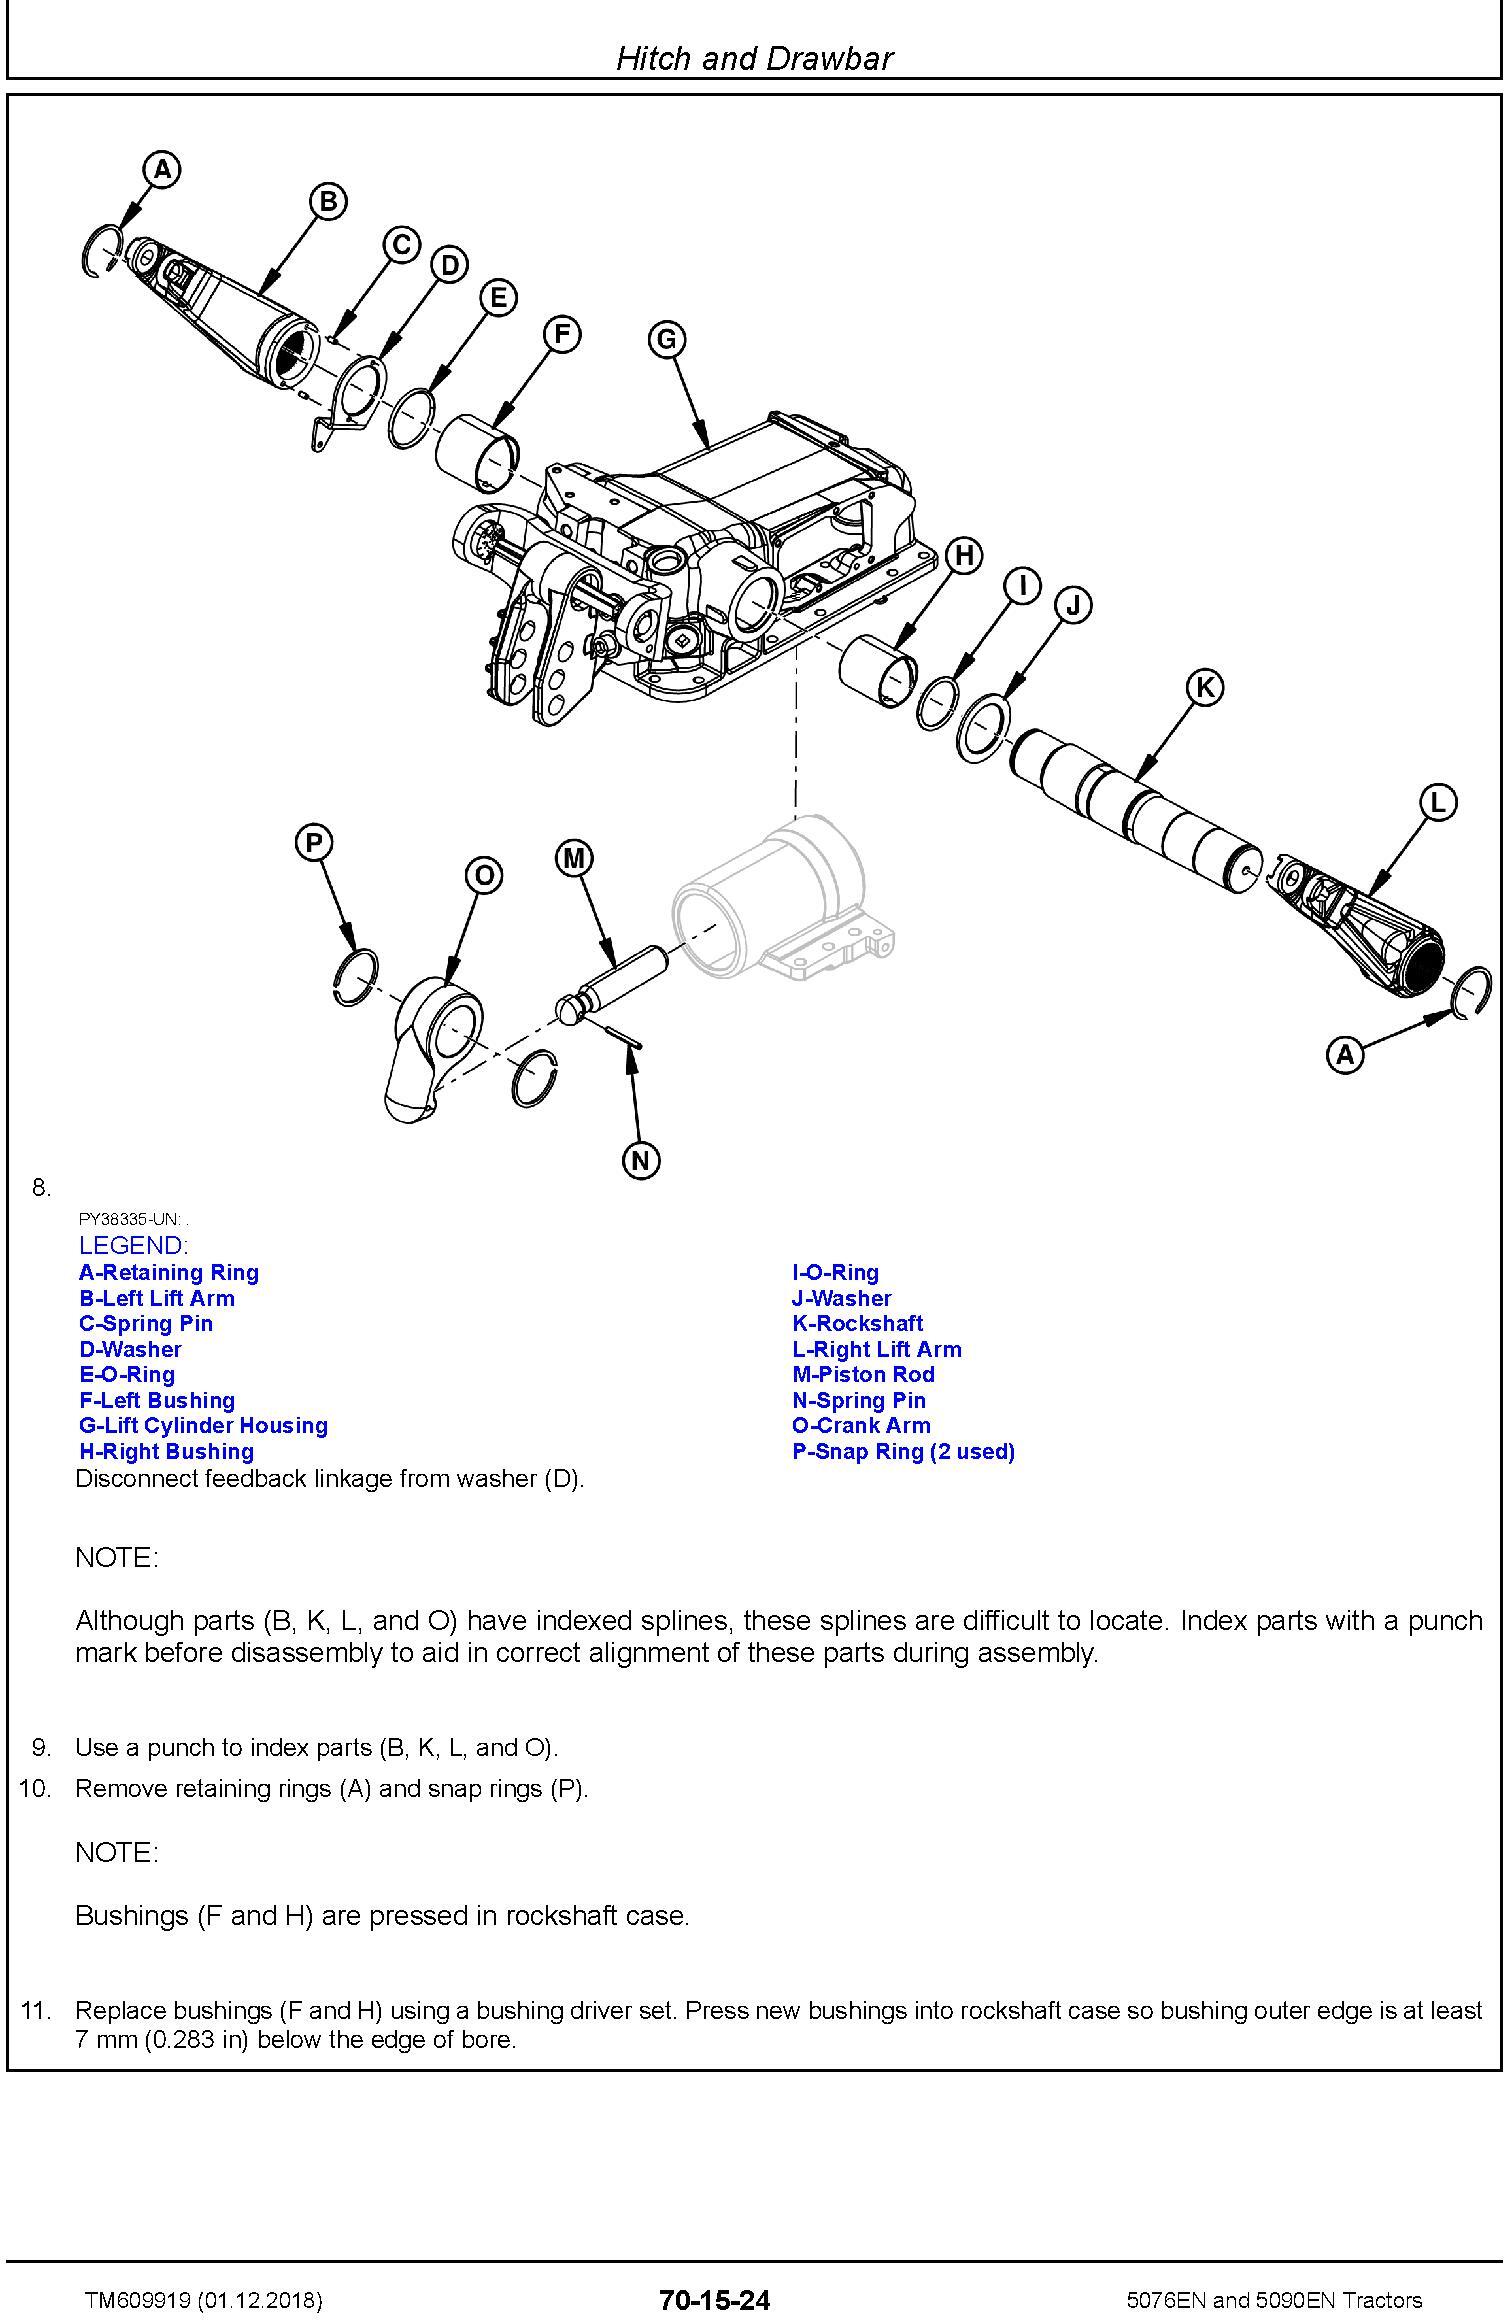 John Deere 5076EN and 5090EN Tractors Repair Technical Service Manual (TM609919) - 2